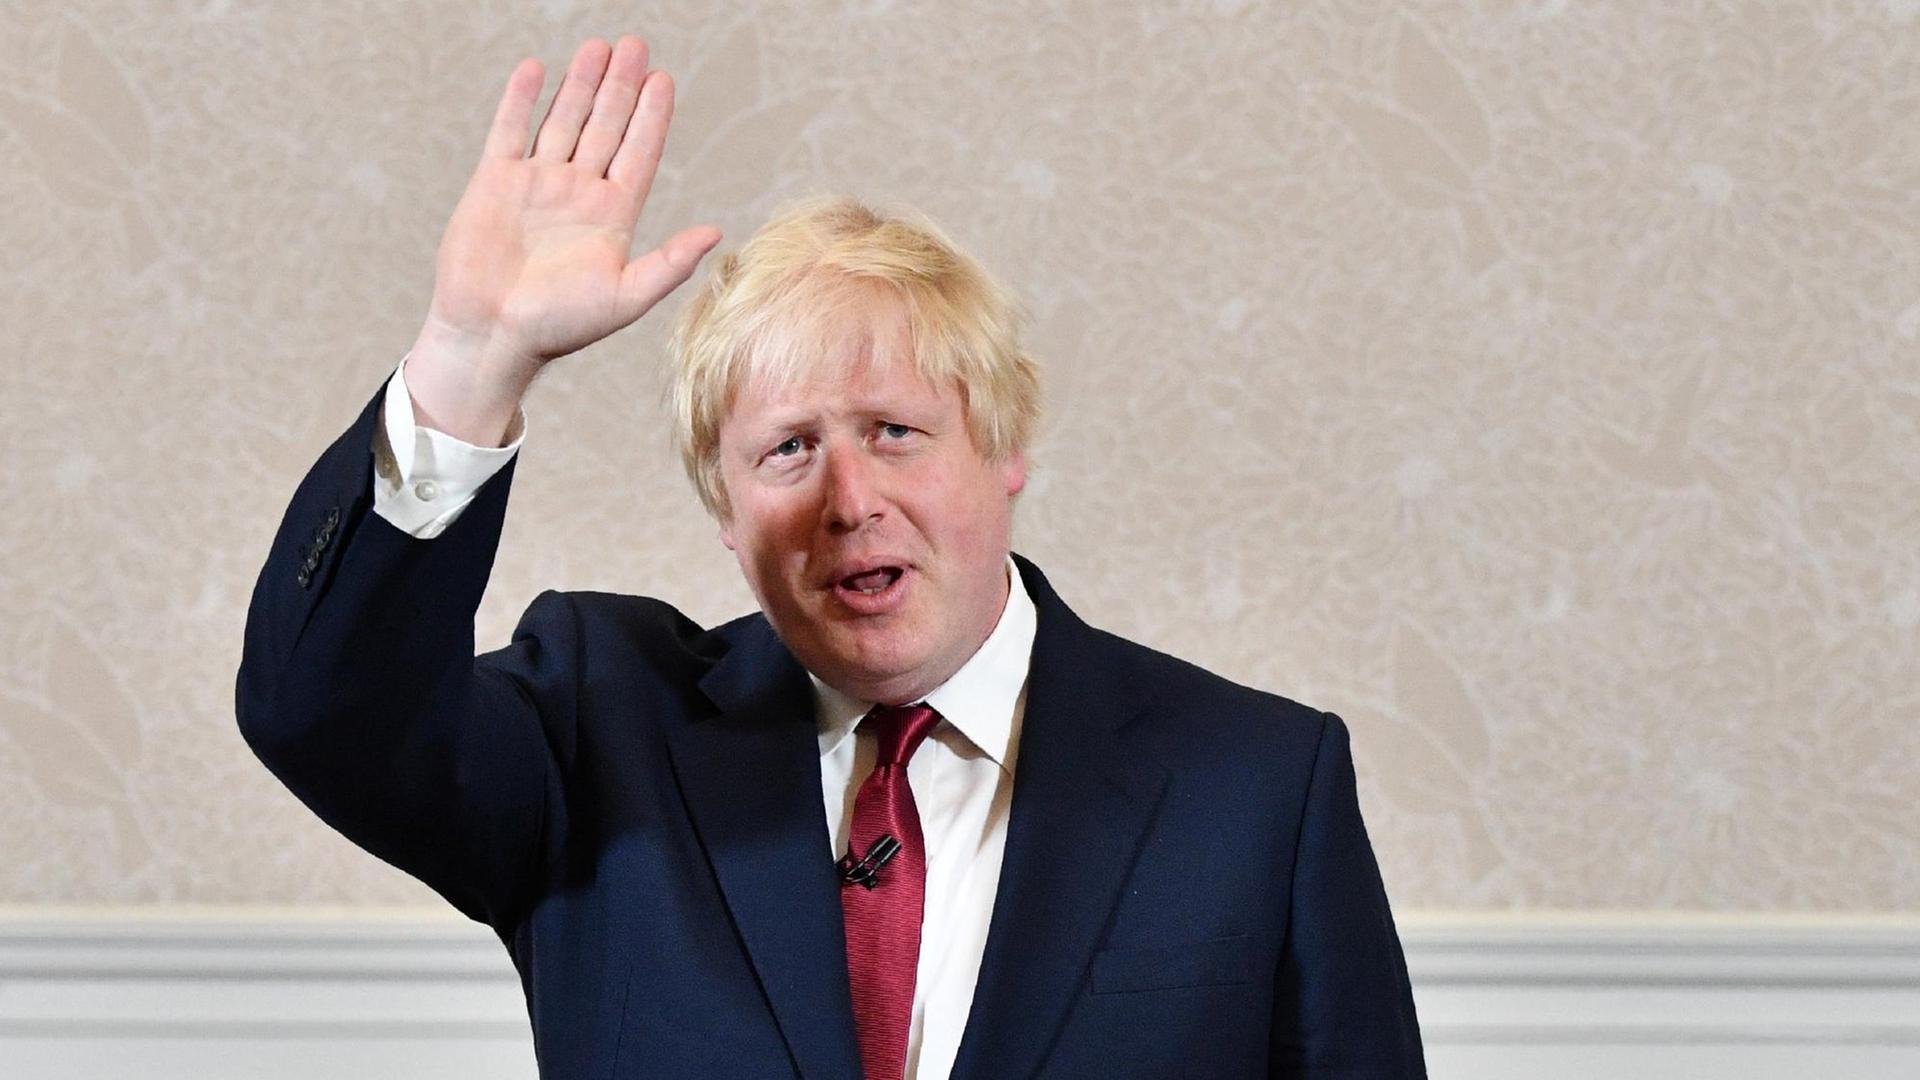 Der frühere Londoner Bürgermeister Boris Johnson winkt in die Kamera.